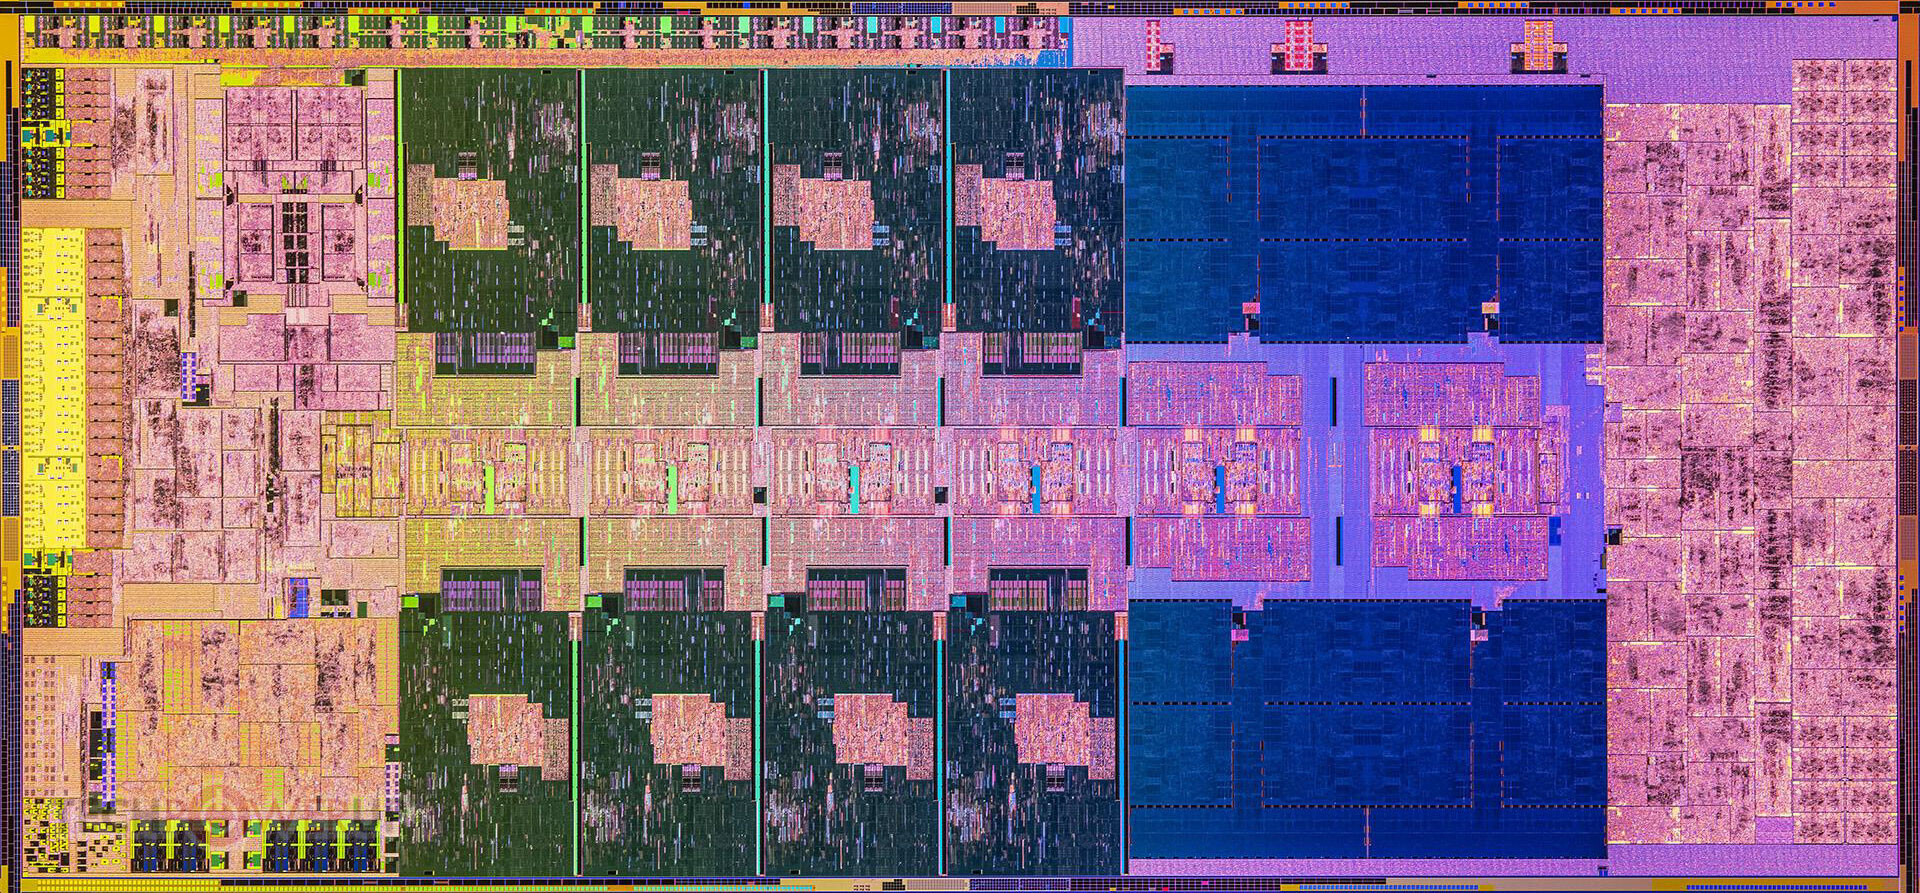 Intel Core i5-13600K Raptor Lake CPU Review